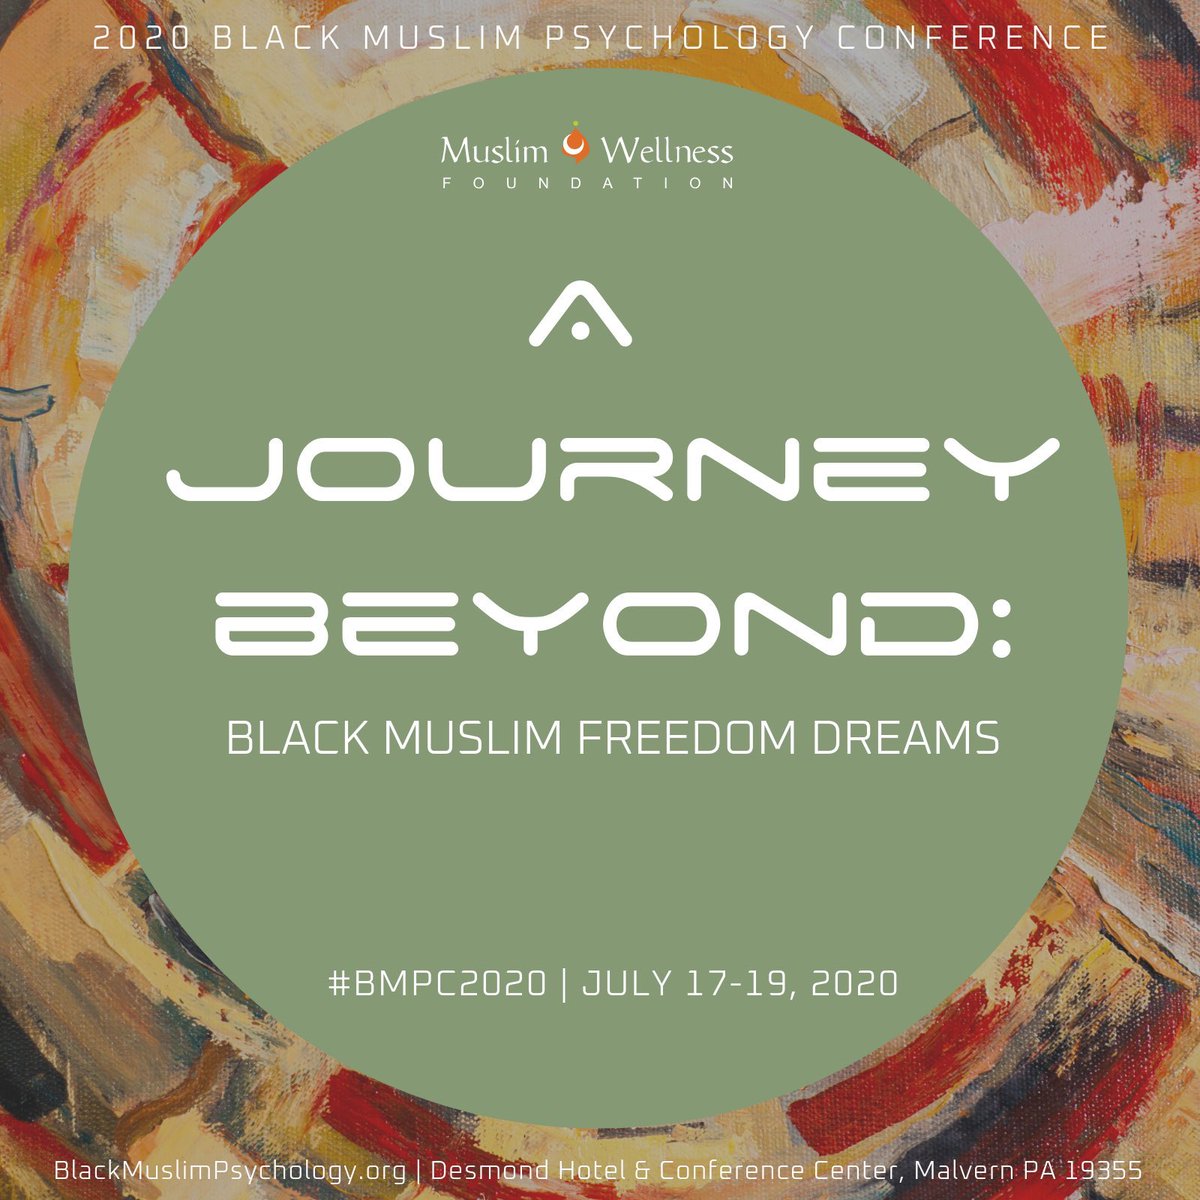 2020 Black Muslim Psychology Conference: https://twitter.com/blackmuslimpsyc/status/1155573398308884481?s=21 #BMPC2020